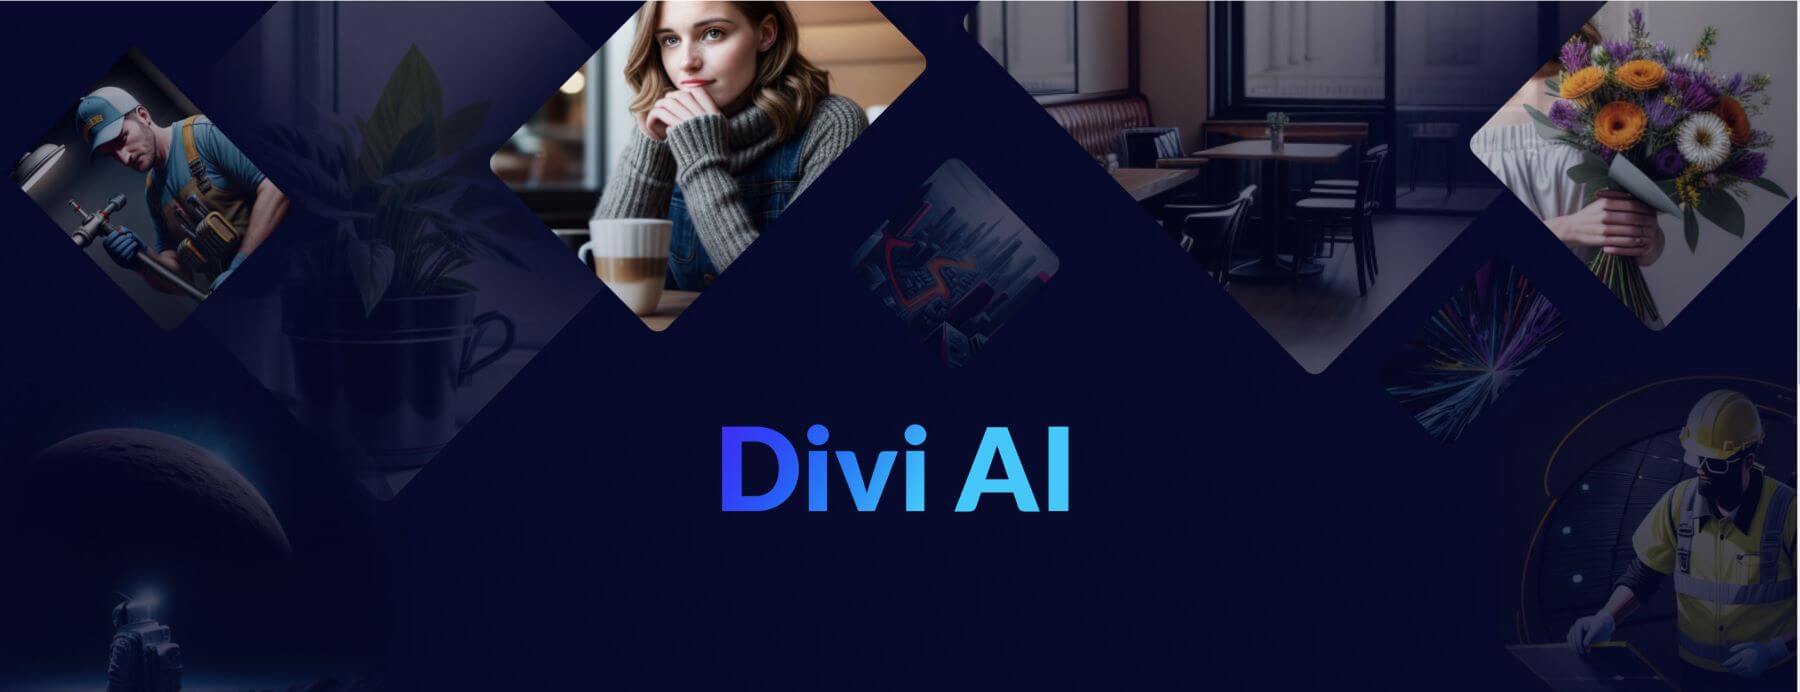 Divi AI для генерации изображений и текста